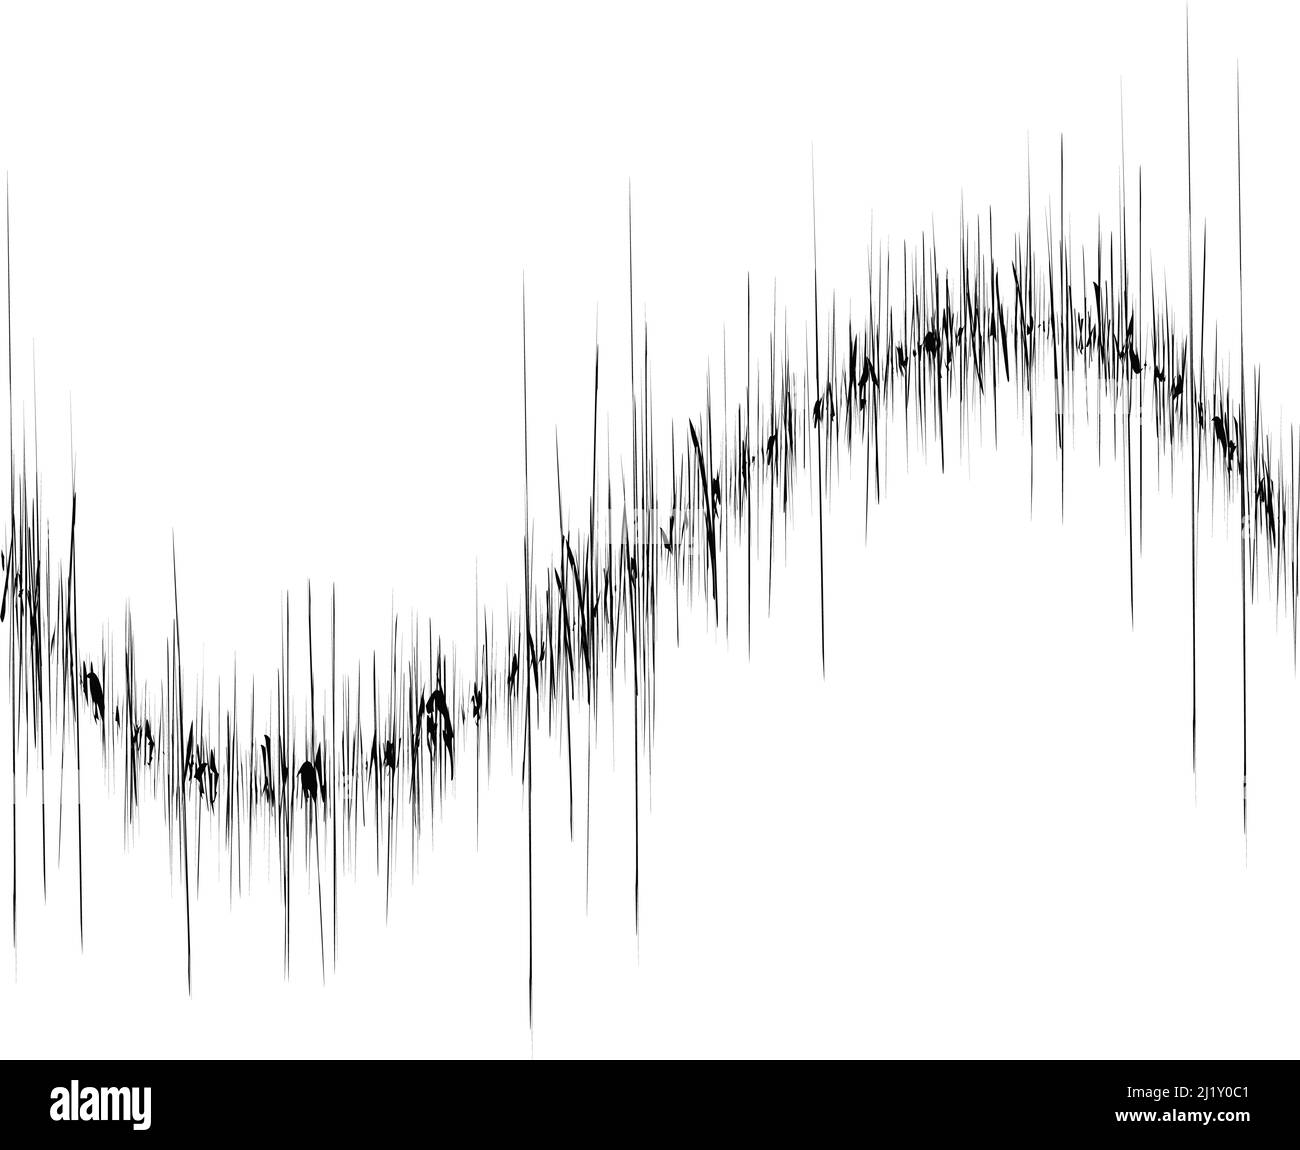 Noise level chart Black and White Stock Photos & Images Alamy